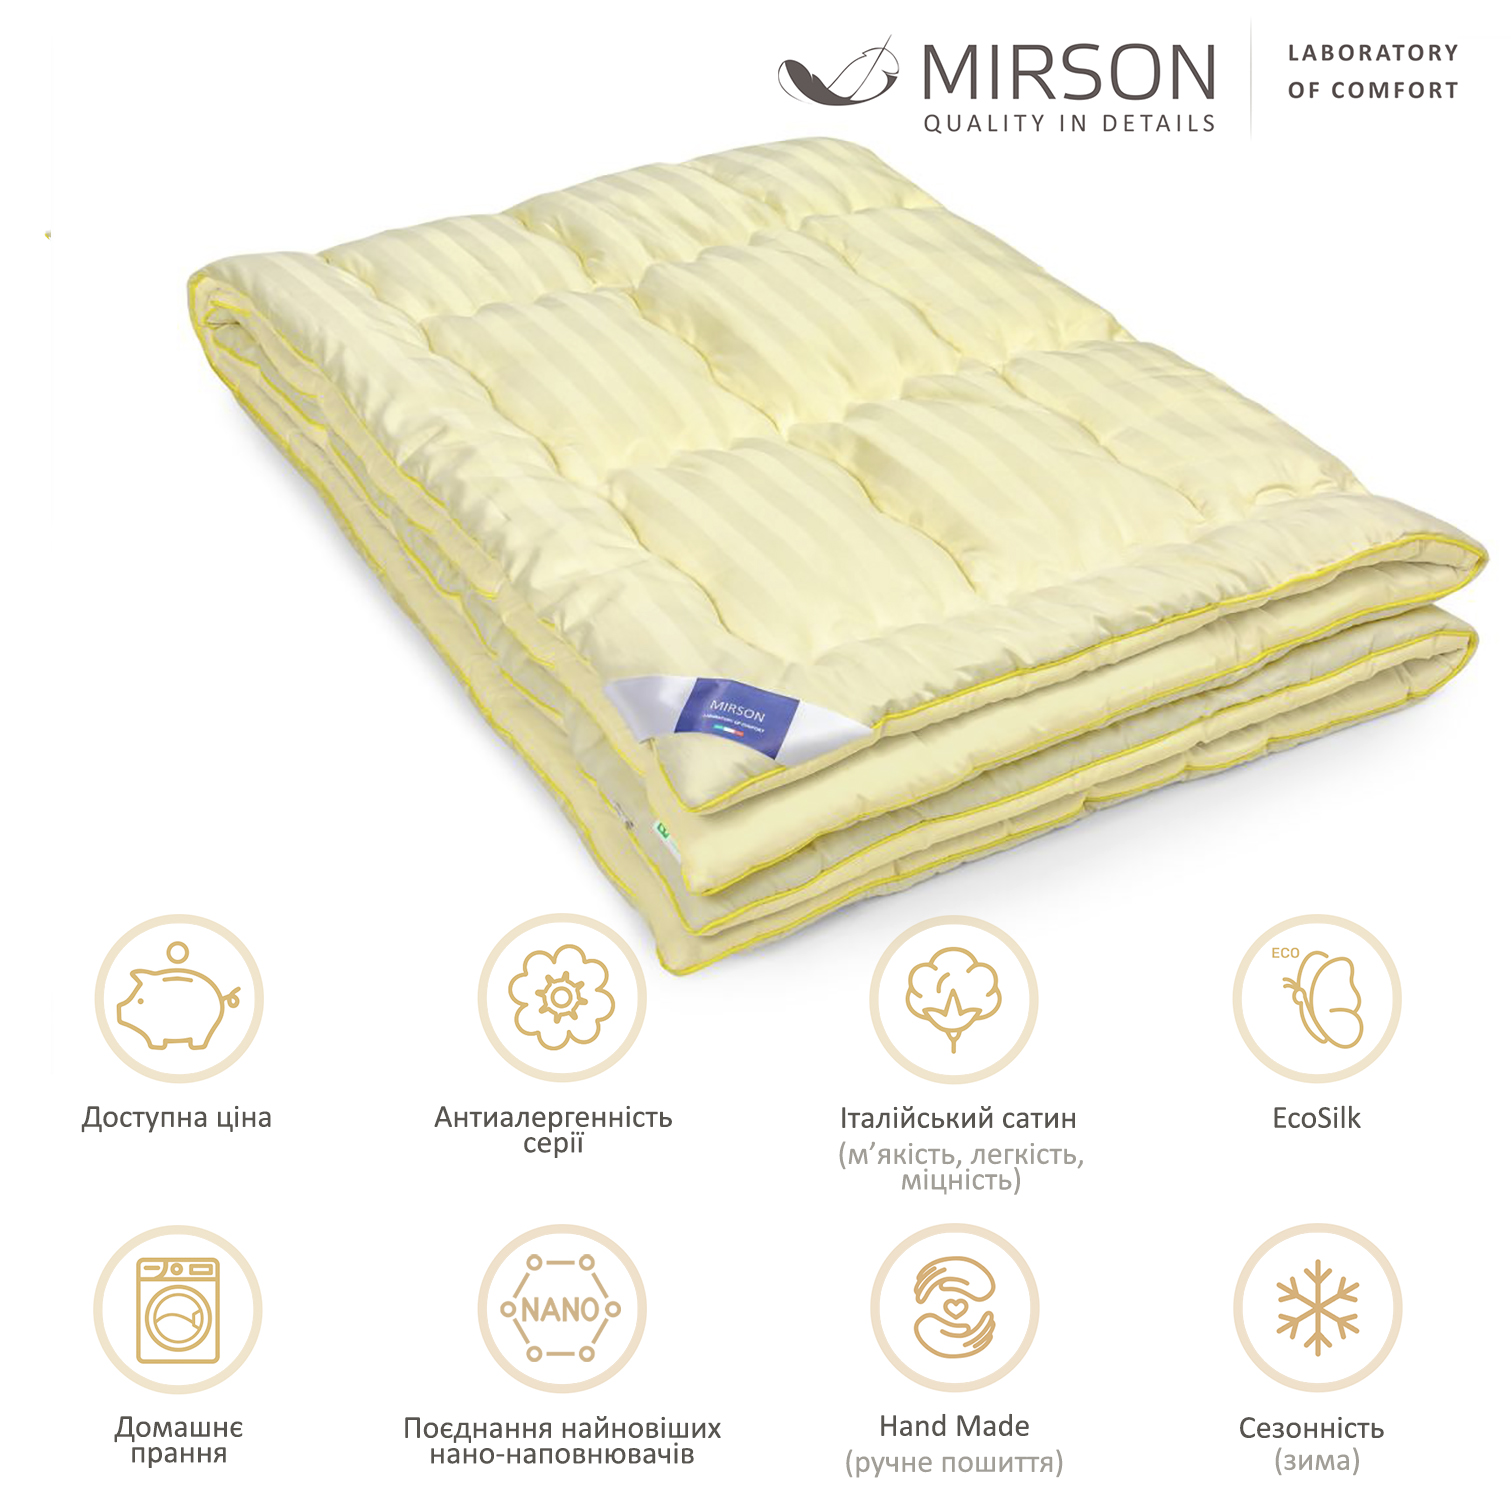 Одеяло антиаллергенное MirSon Carmela Hand Made EcoSilk №068, зимнее, 140x205 см, светло-желтое - фото 4